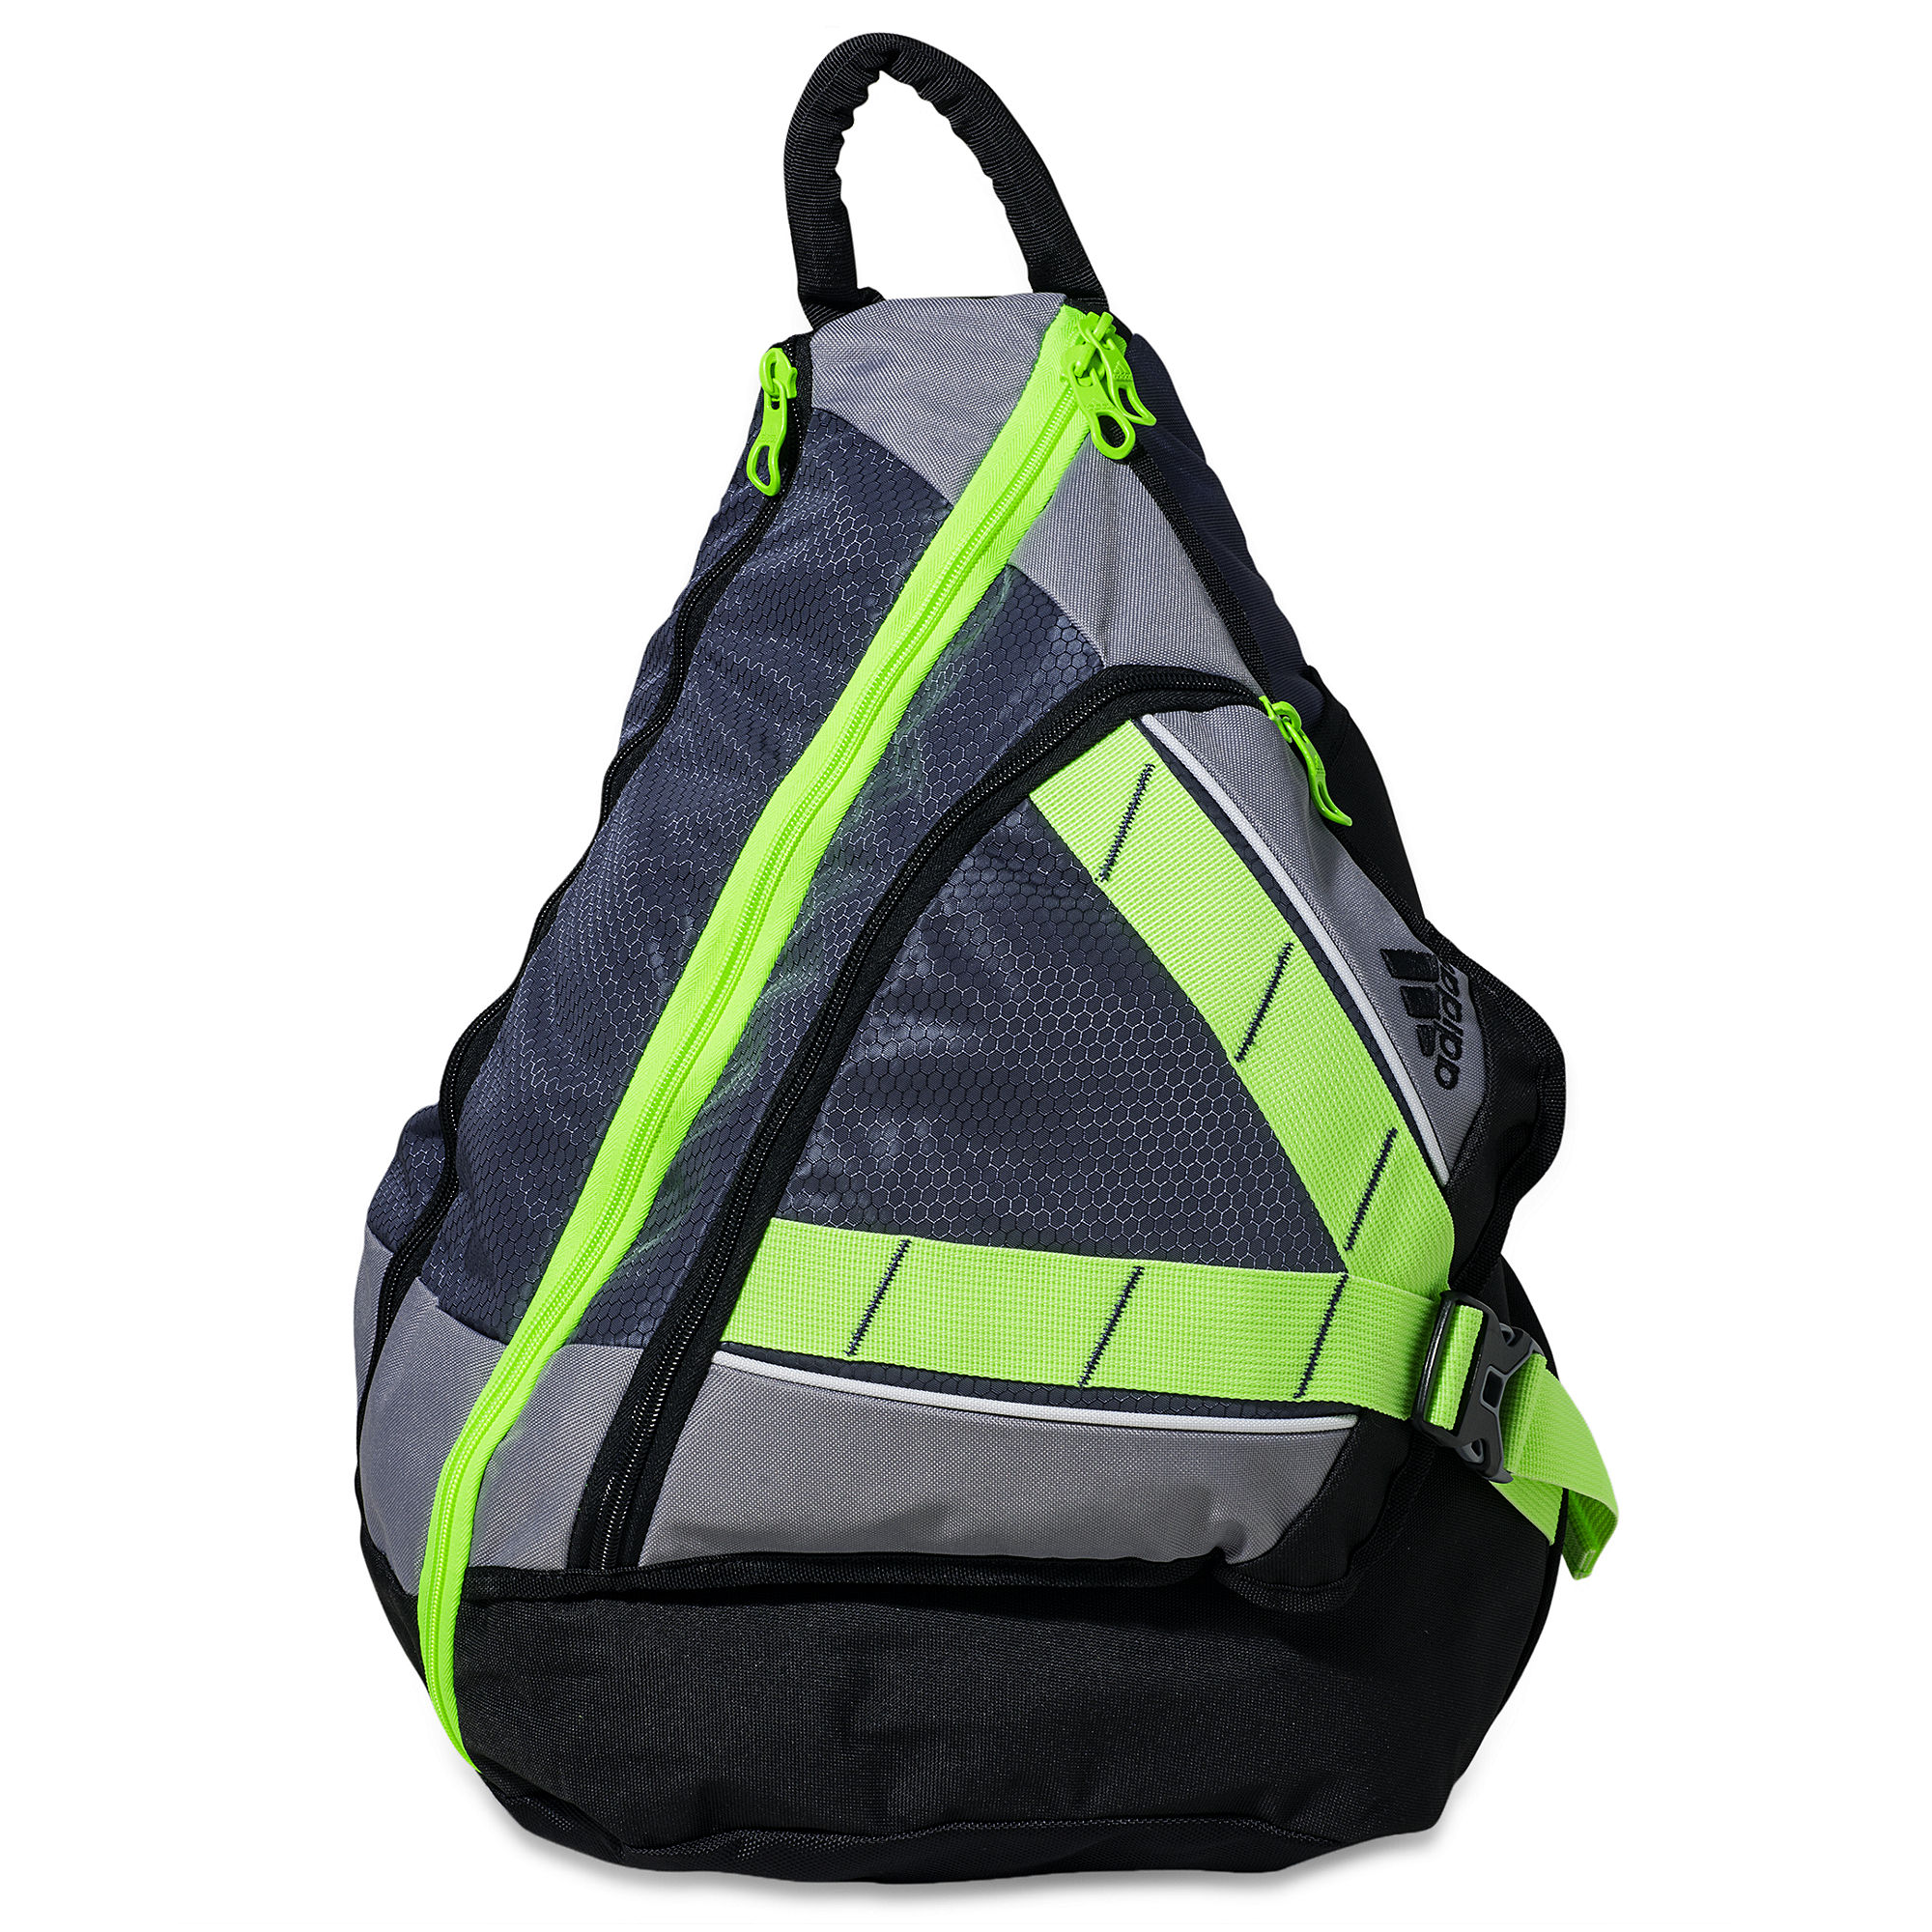 adidas sling backpacks